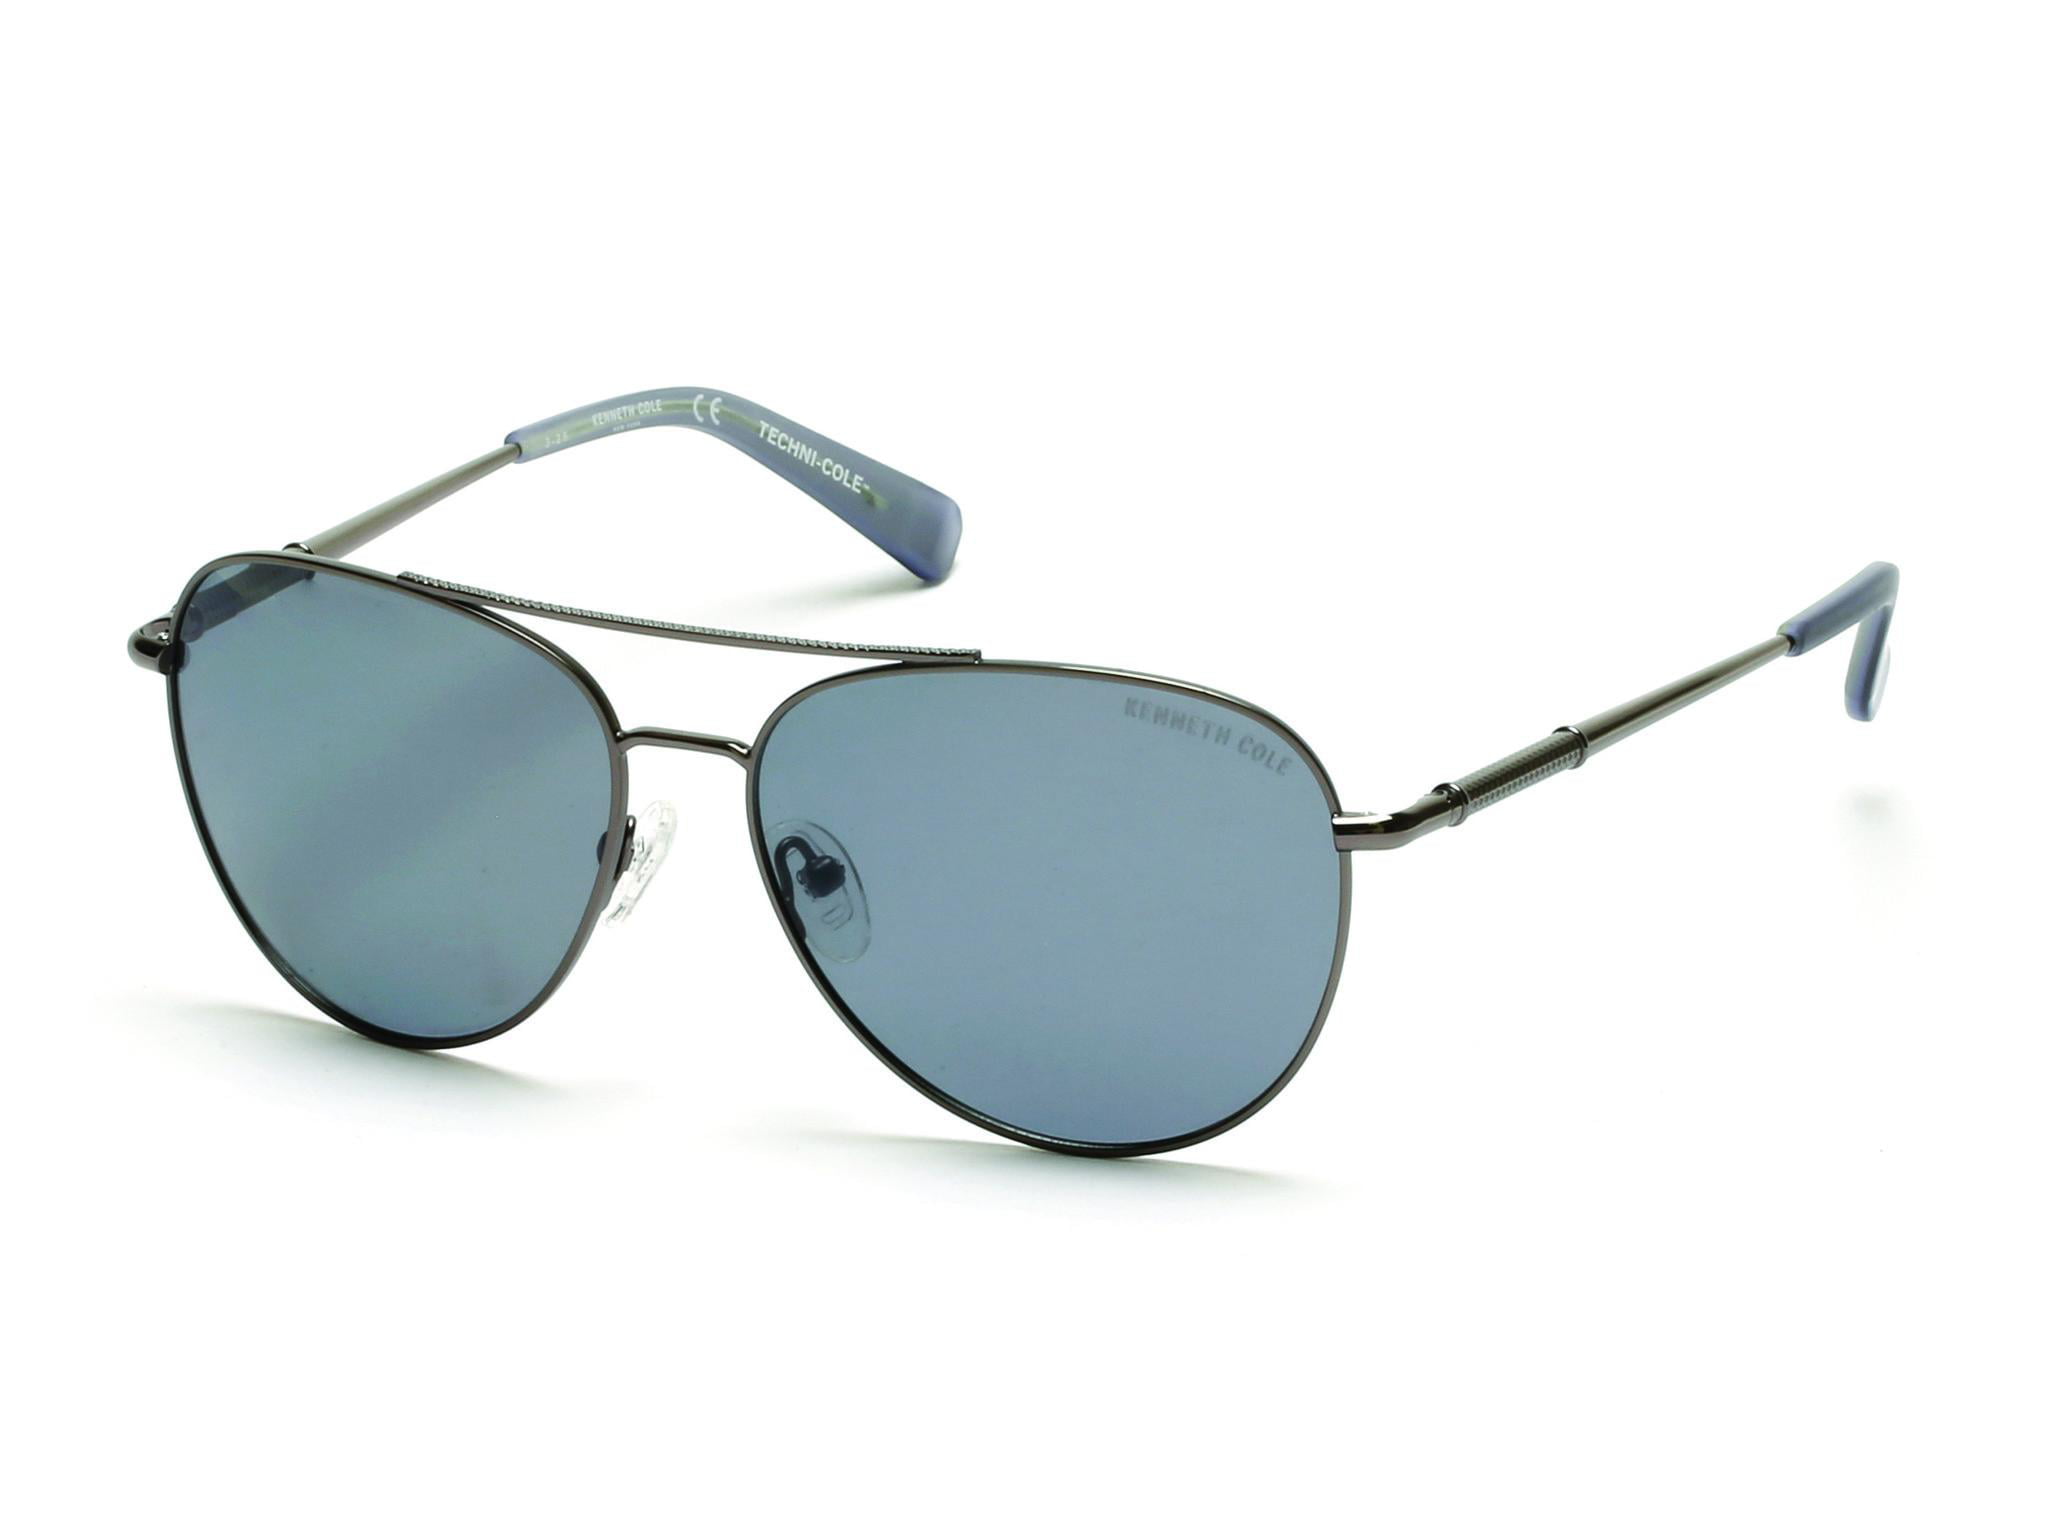 smoke polarized Sunglasses Kenneth Cole New York KC 7212 08D shiny gumetal